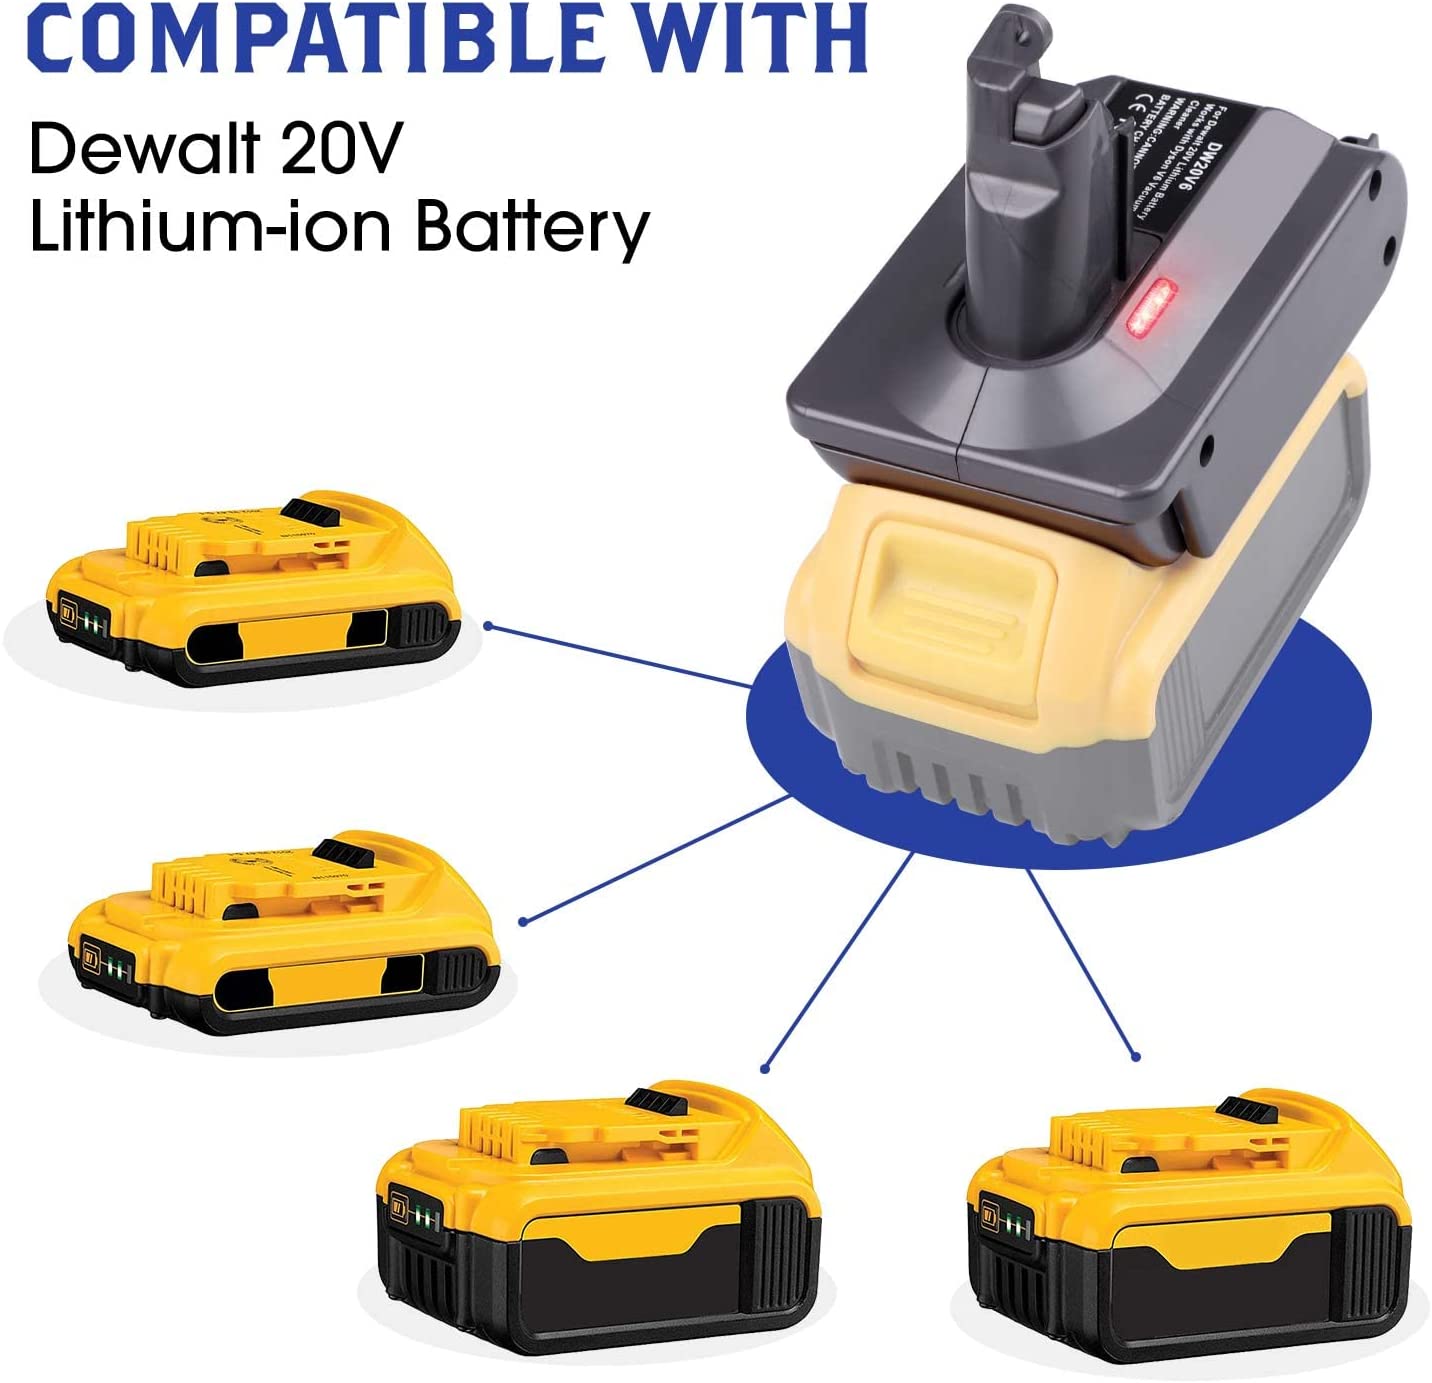 Dyson Batterieadapter für Dewalt 20 V Lithiumbatterie, umgewandelt in Dyson V7 Batterie